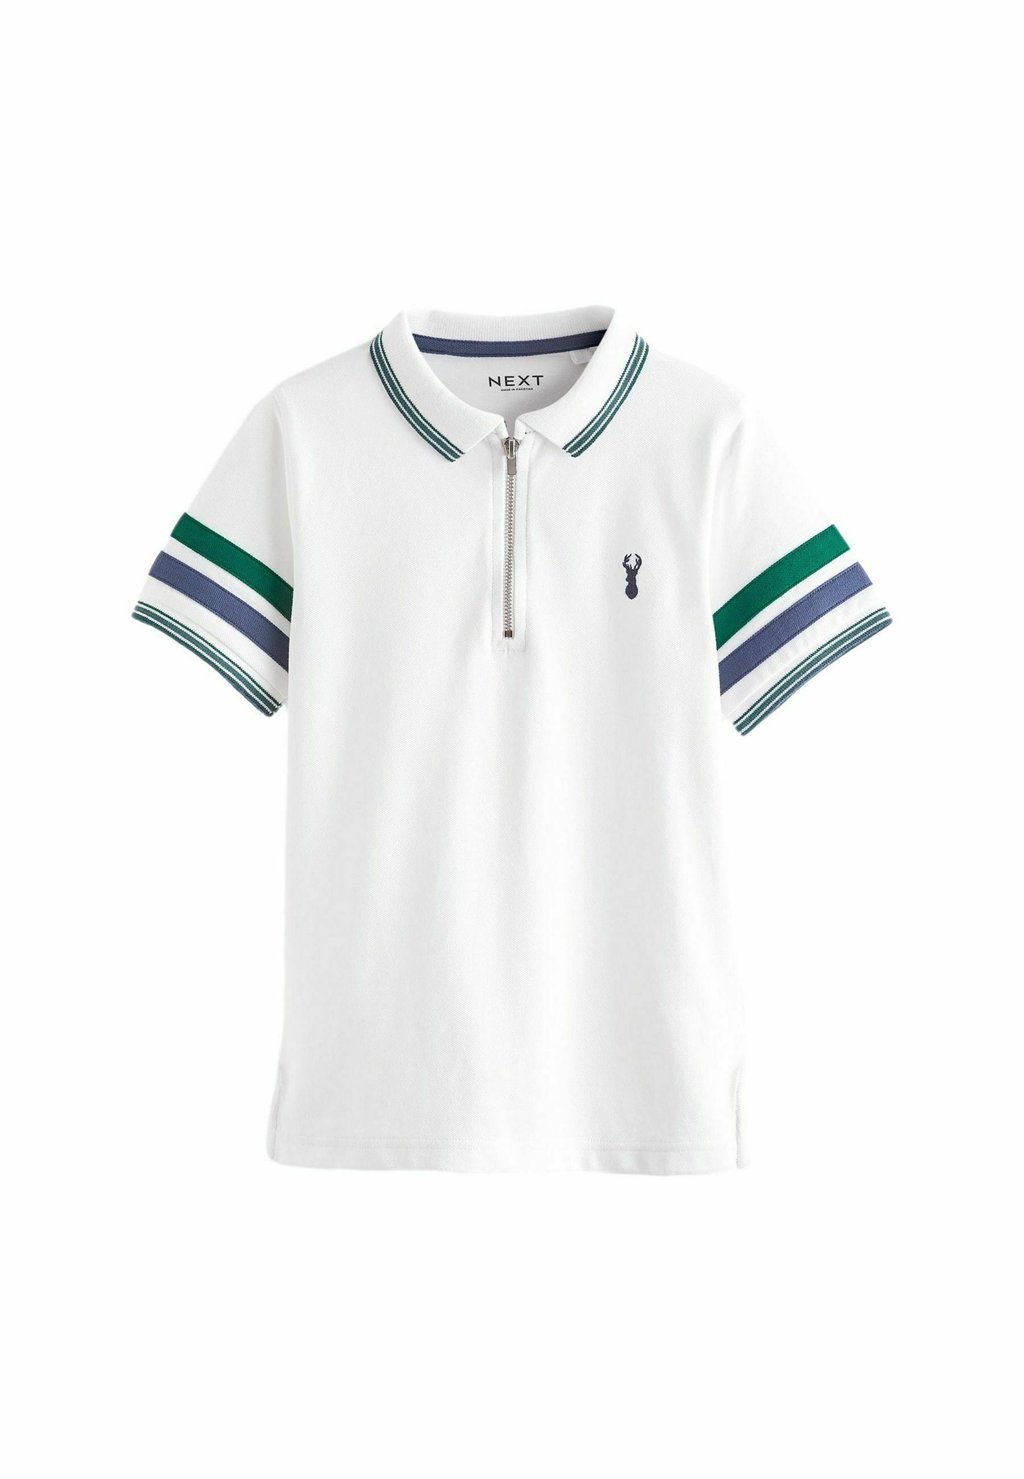 Рубашка поло SHORT SLEEVE REGULAR FIT Next, цвет white green рубашка поло short sleeve regular fit next цвет neutral